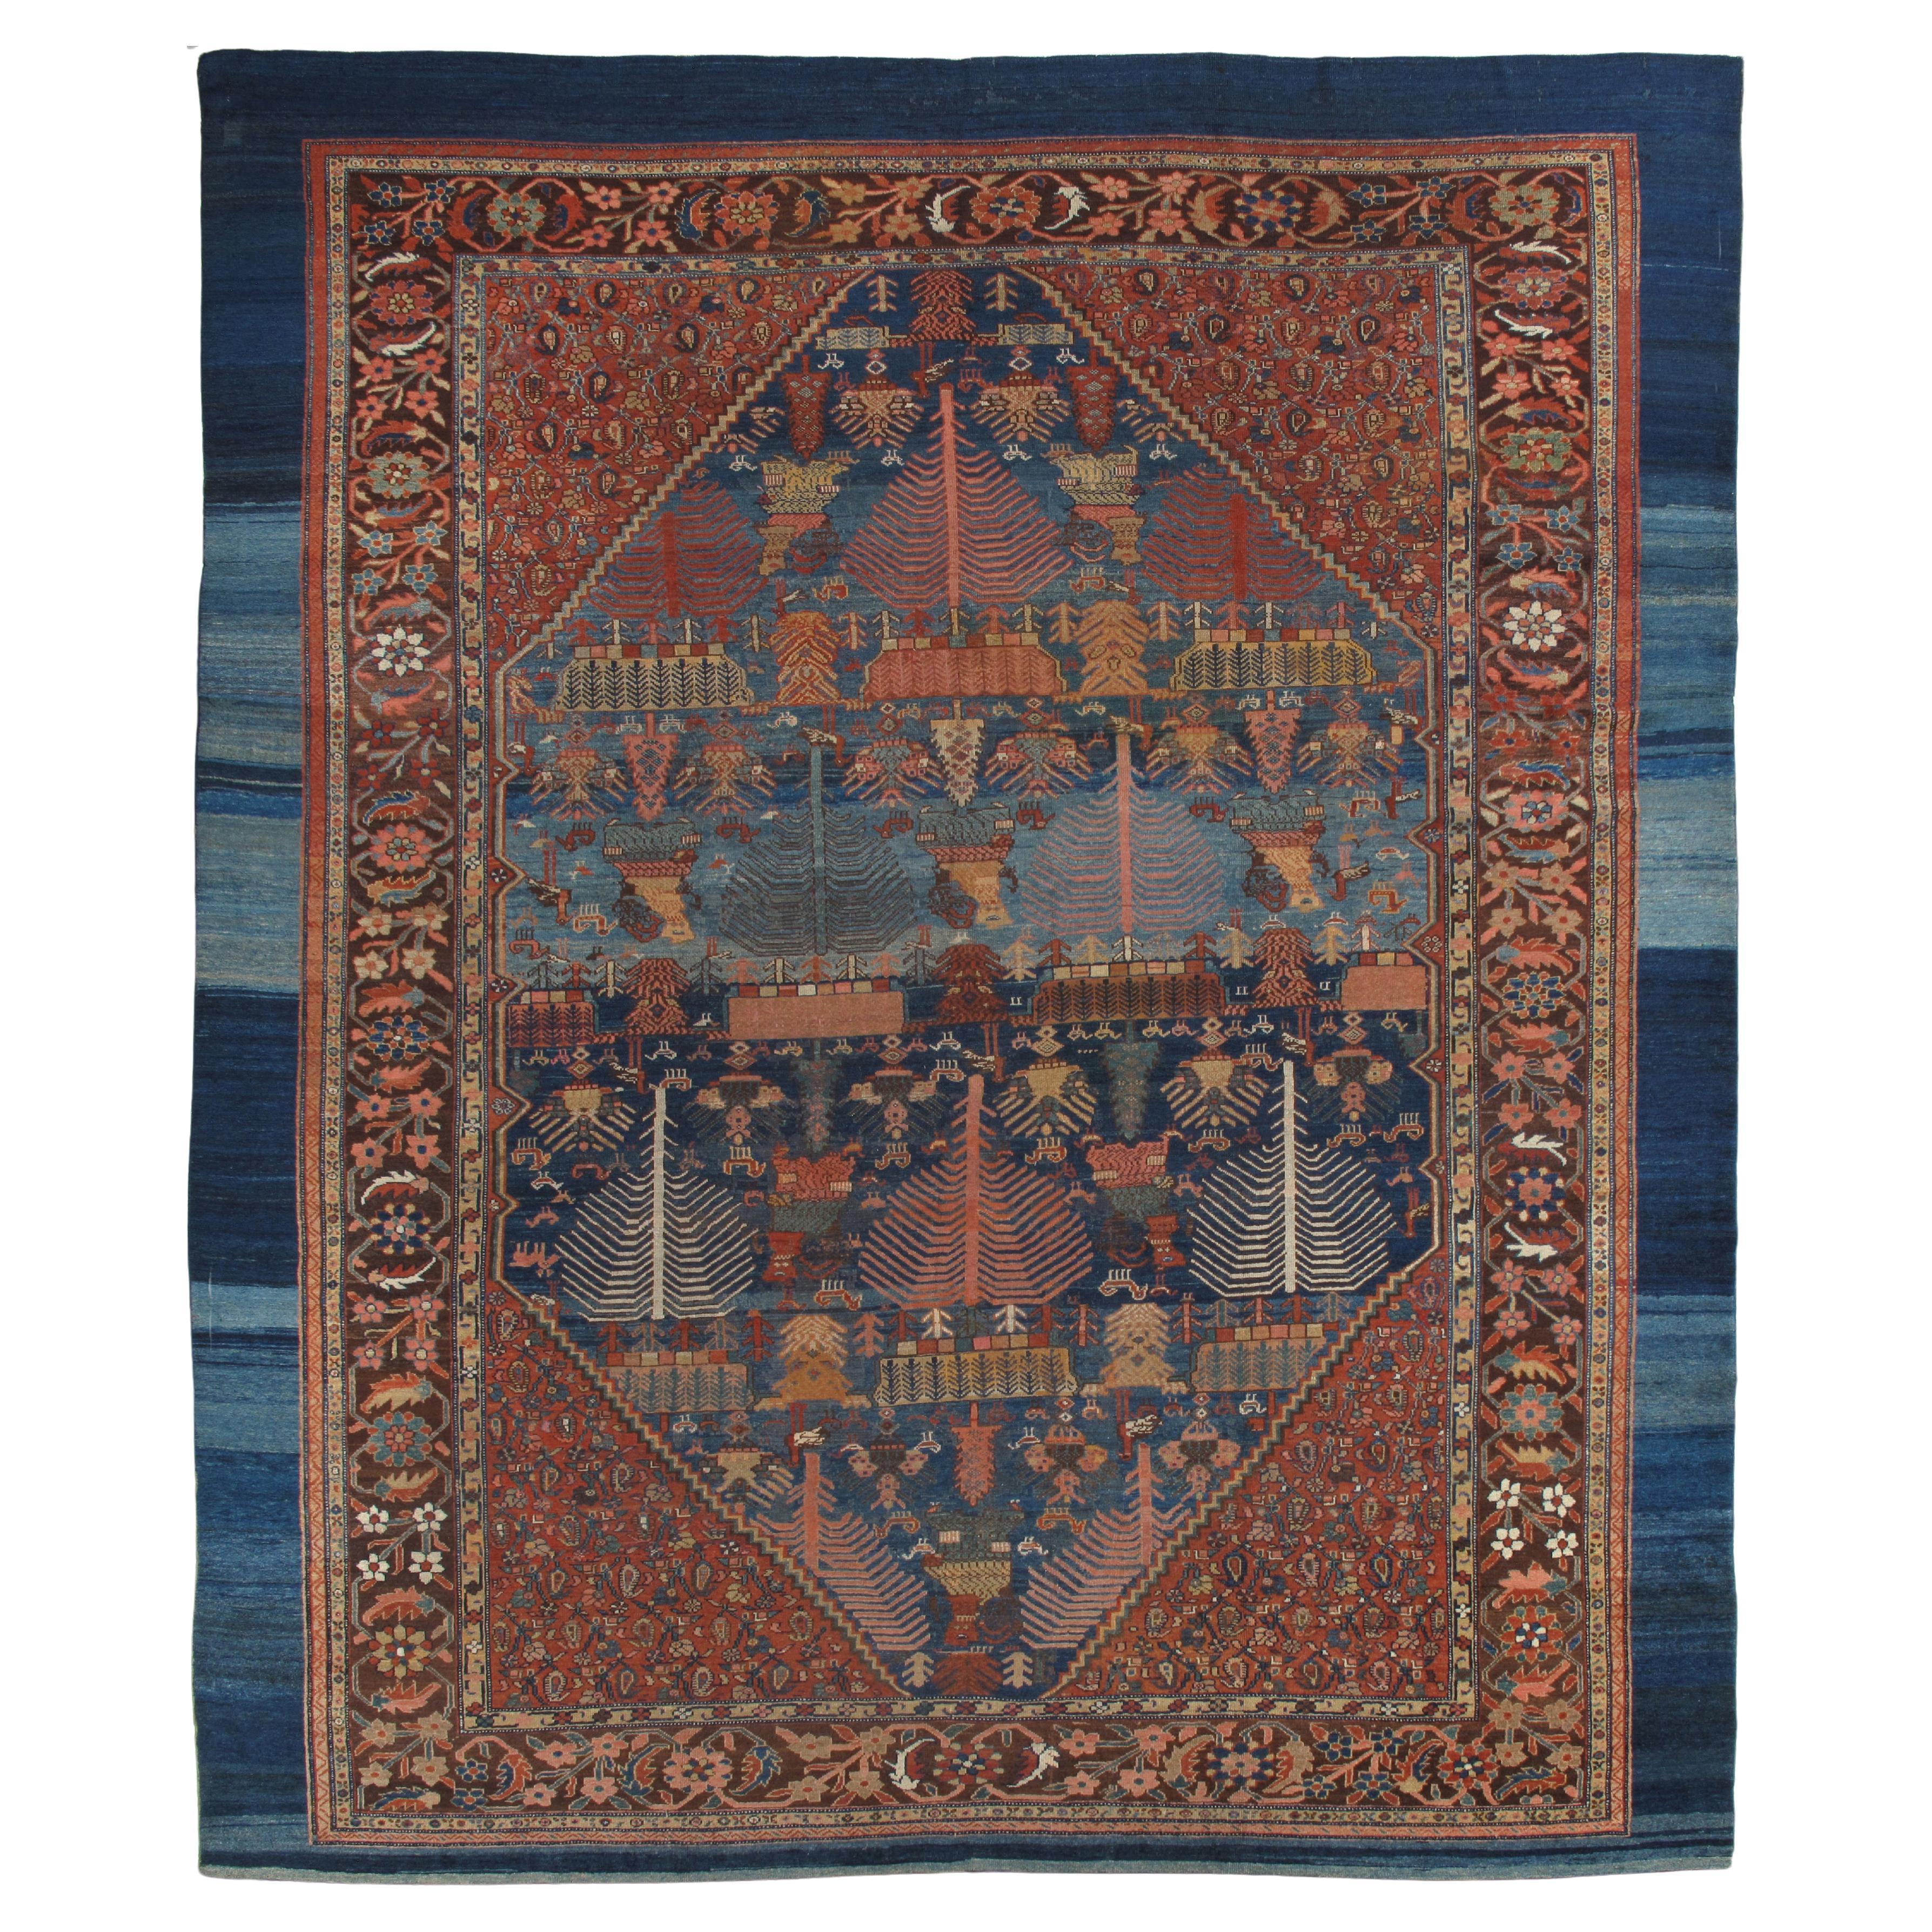 Antique Bakshaish Carpet, Oriental Persian Handmade in Light Blue, Rust and Gold For Sale